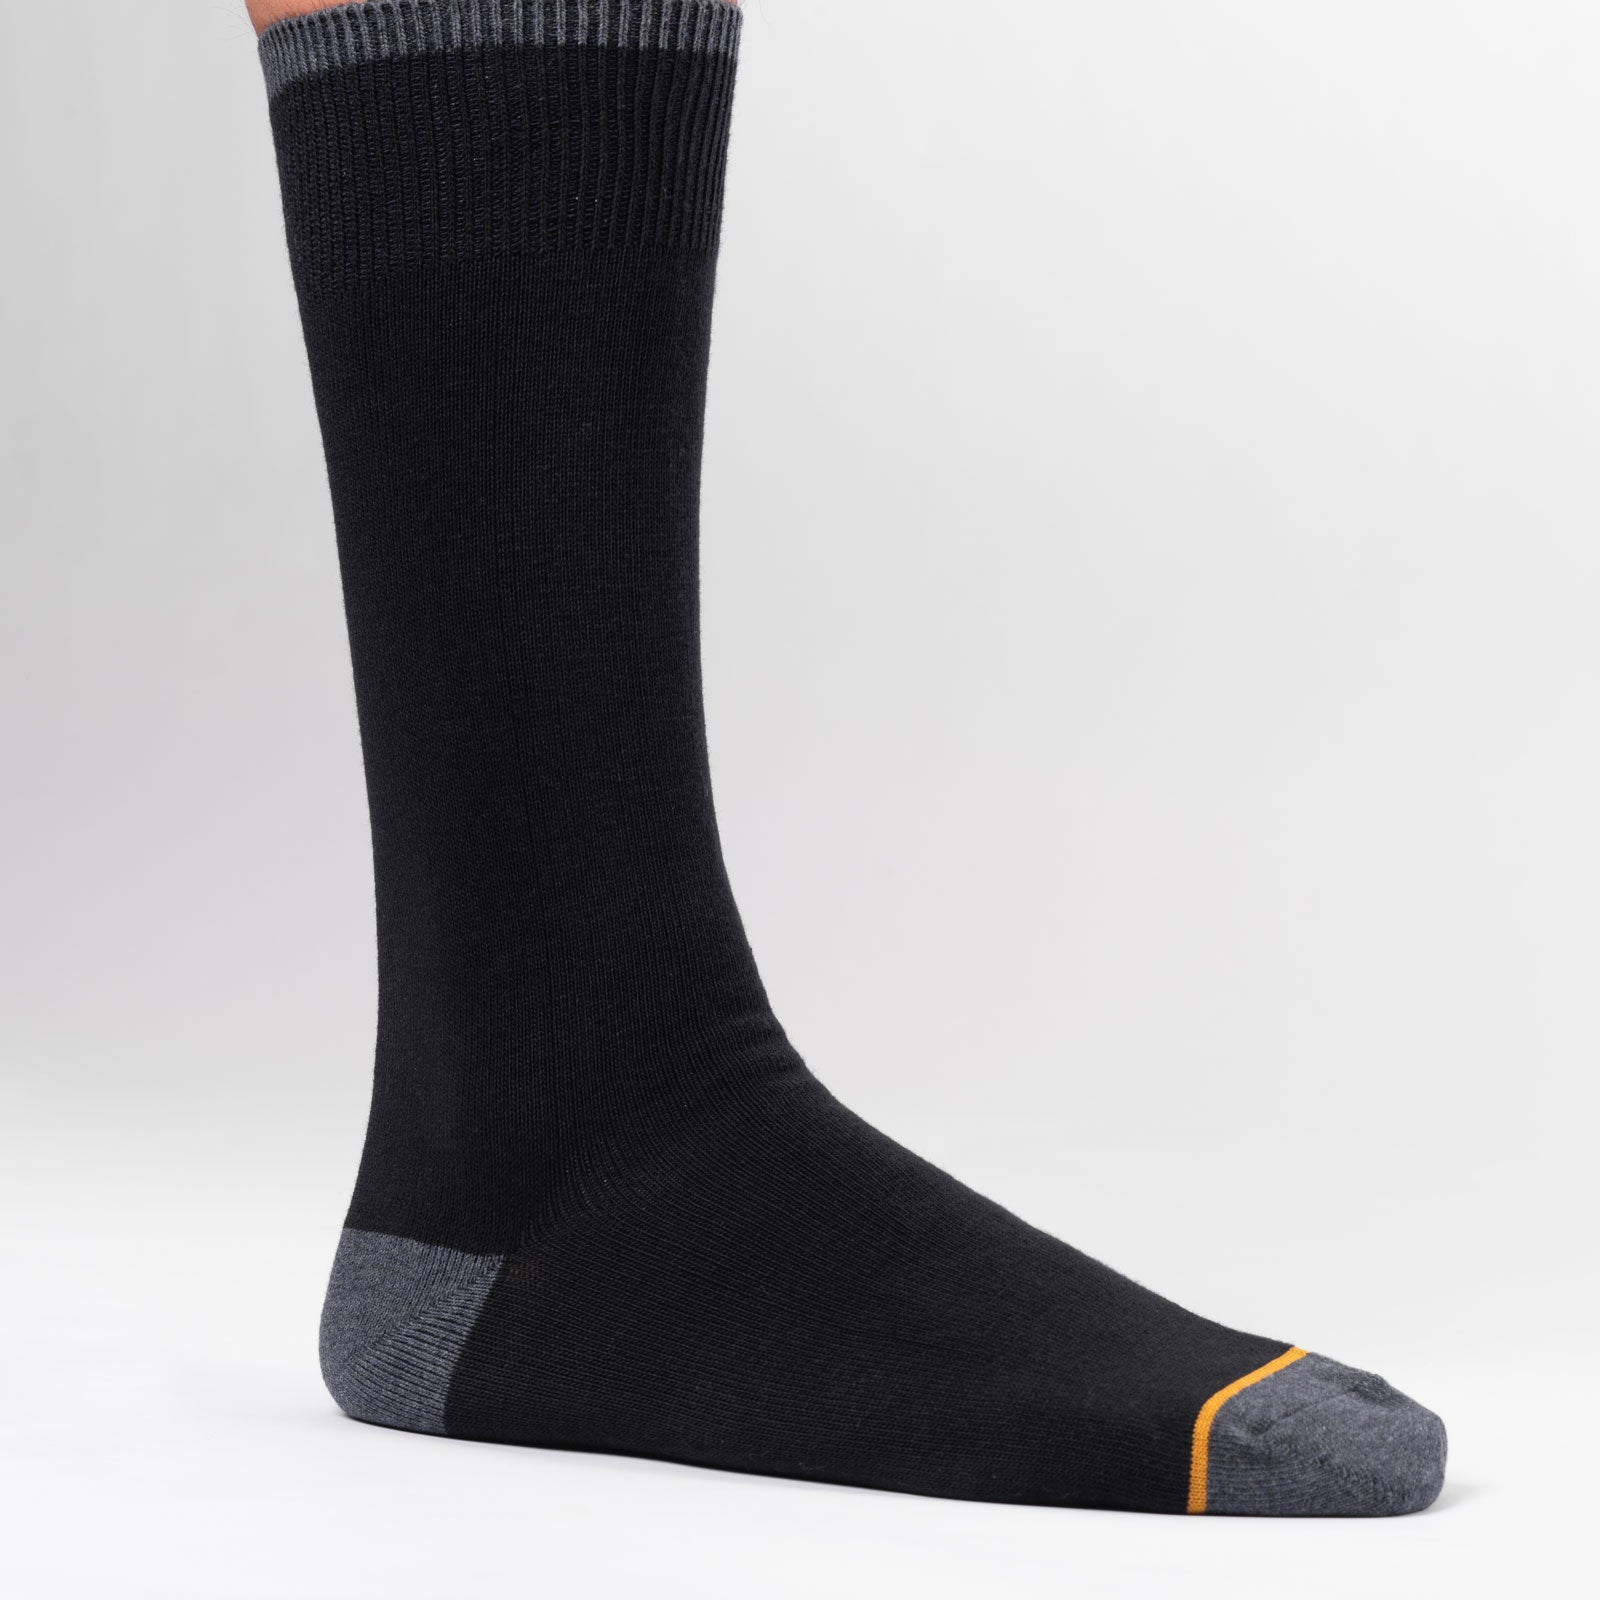 Gold Toe Over the Calf Socks Extended Size 3pk